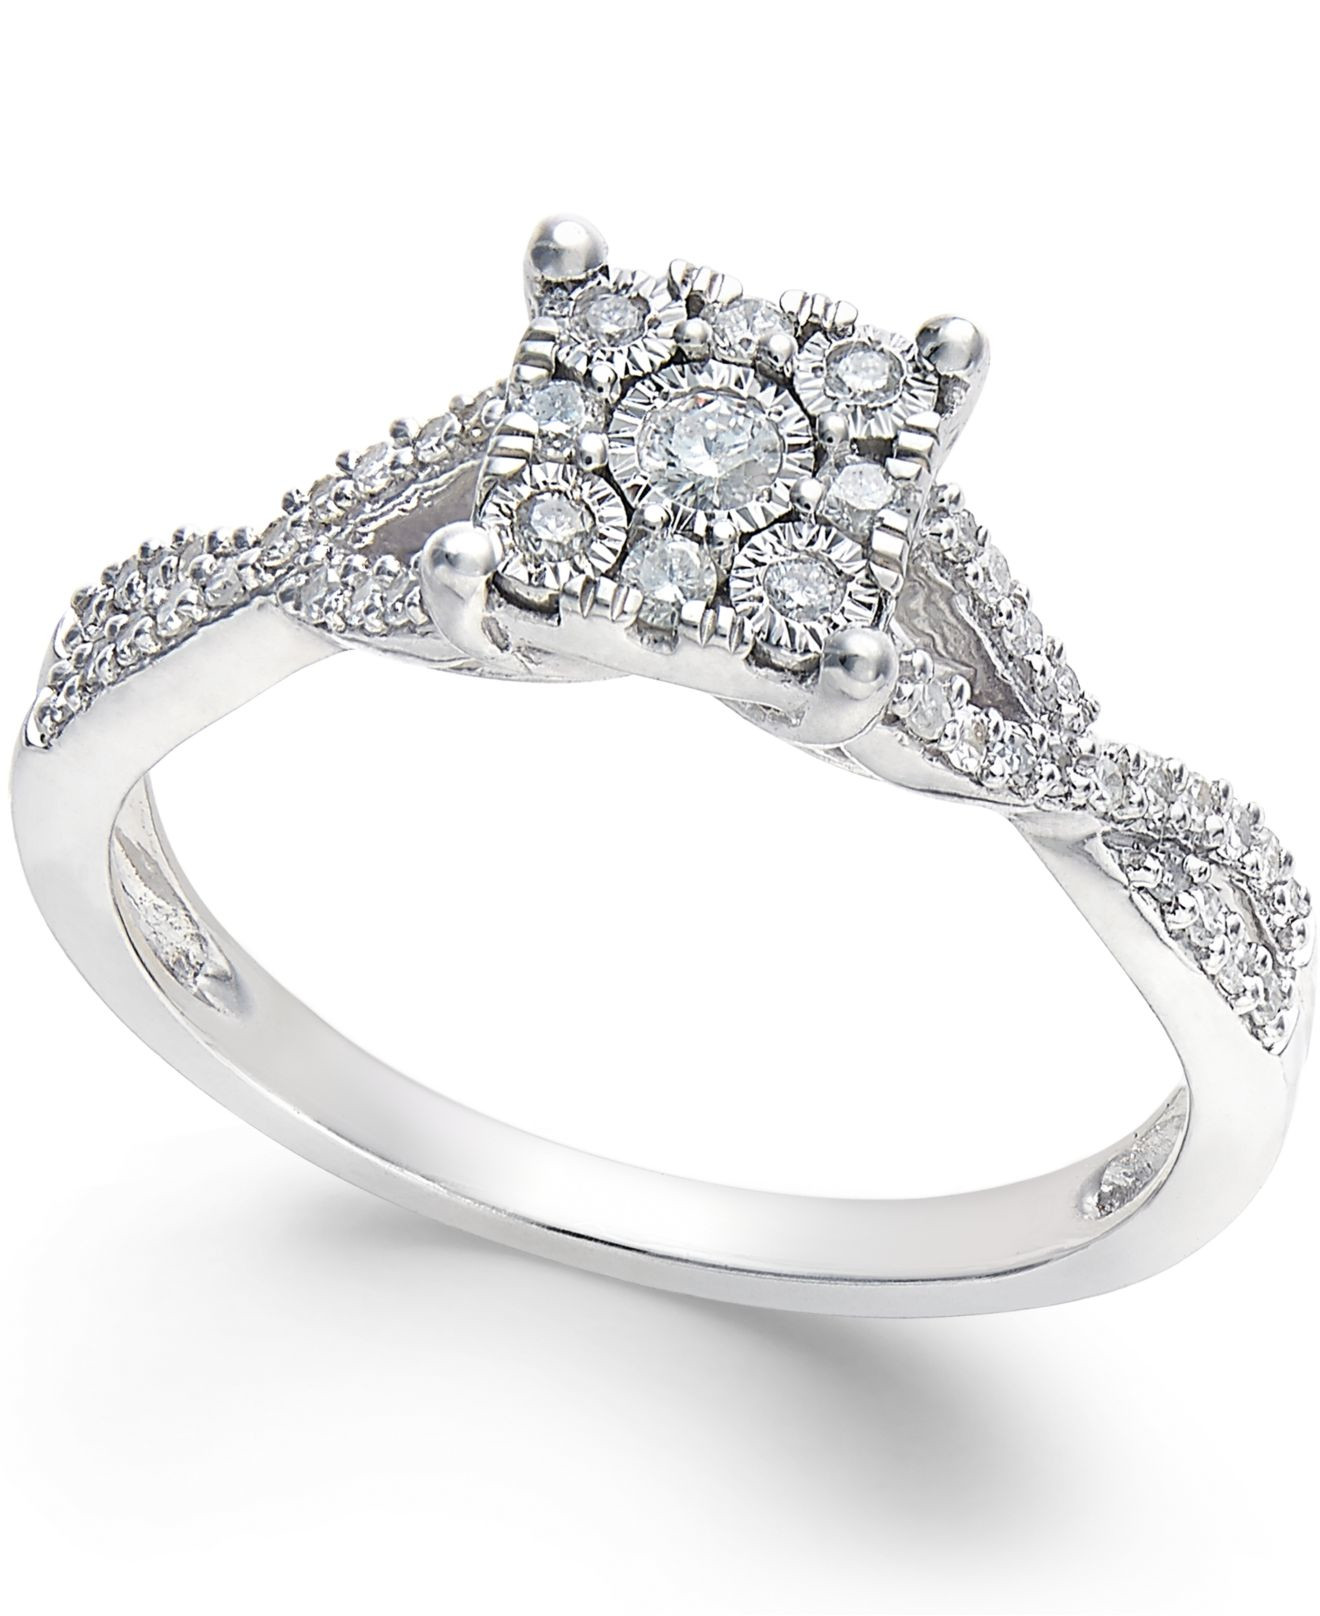 Promise Rings Princess Cut
 No vendor Princess cut Diamond Promise Ring 1 4 ct T w